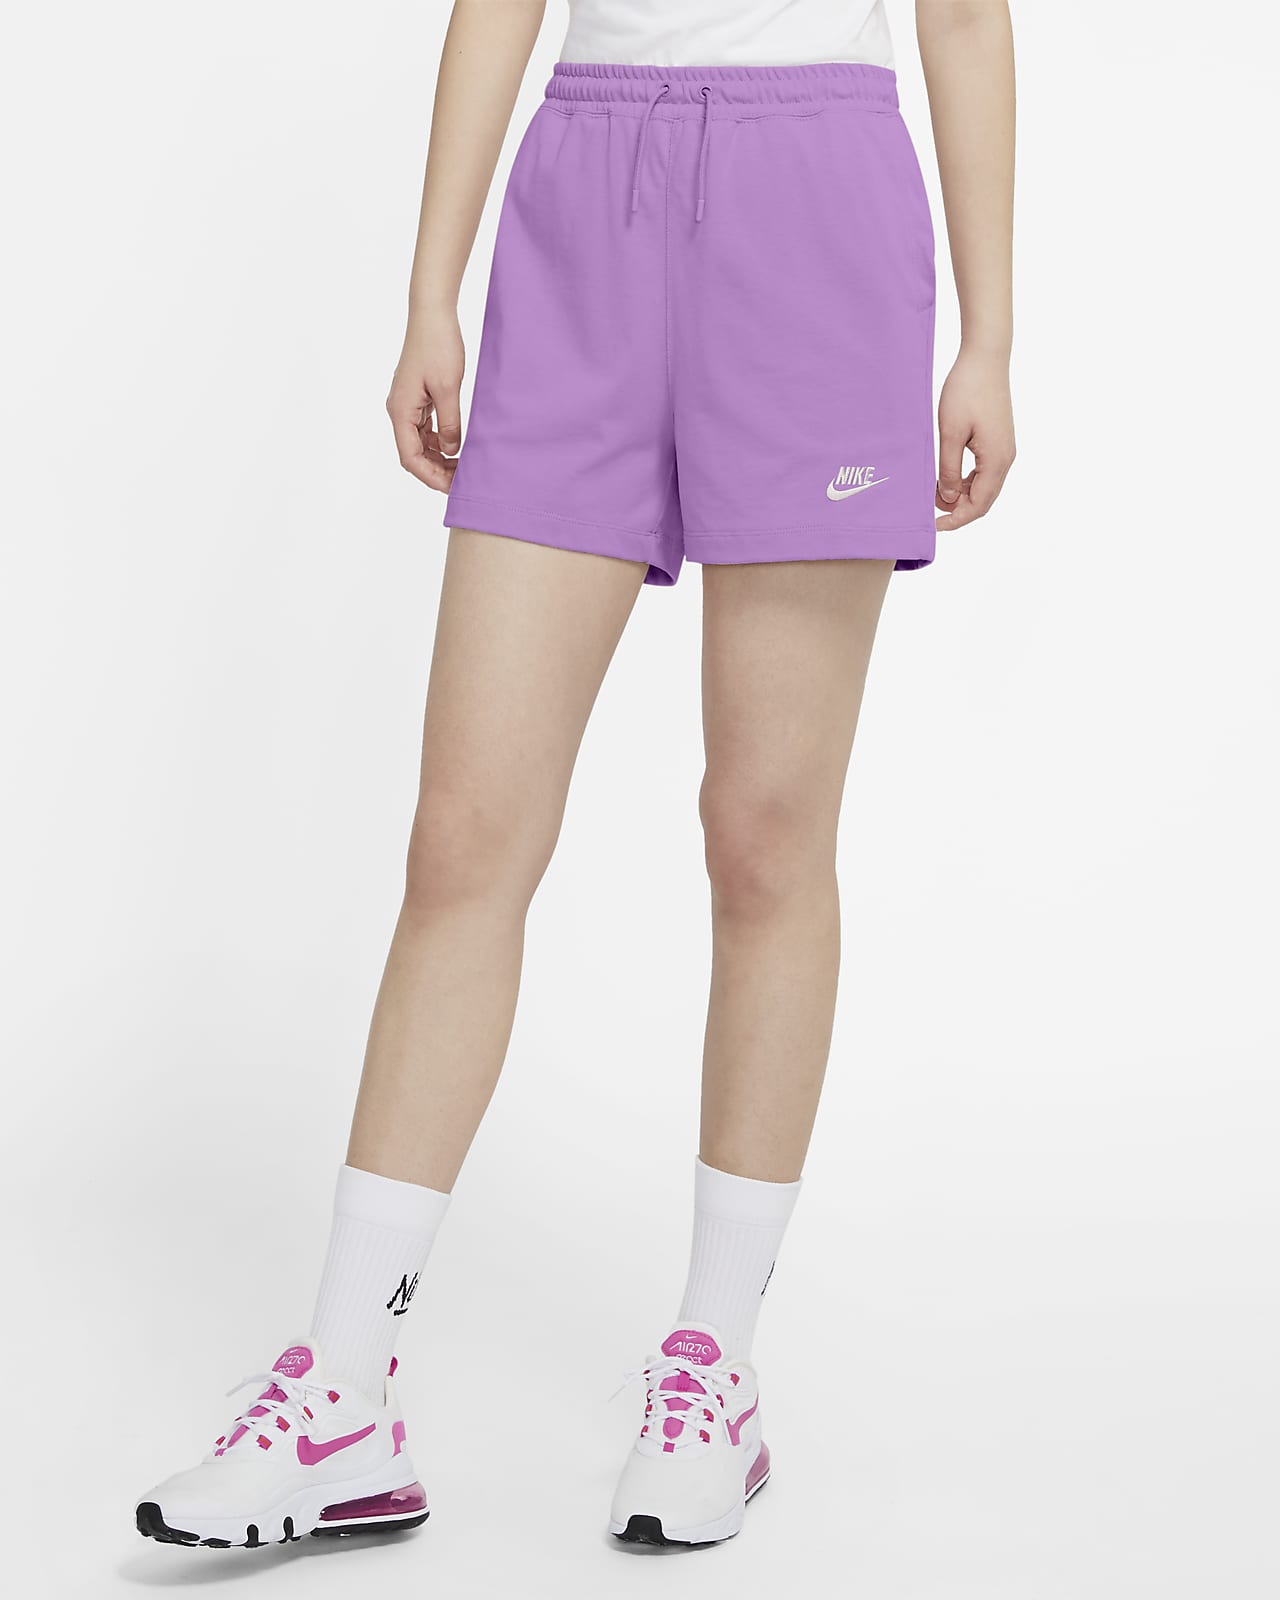 nike logo shorts womens